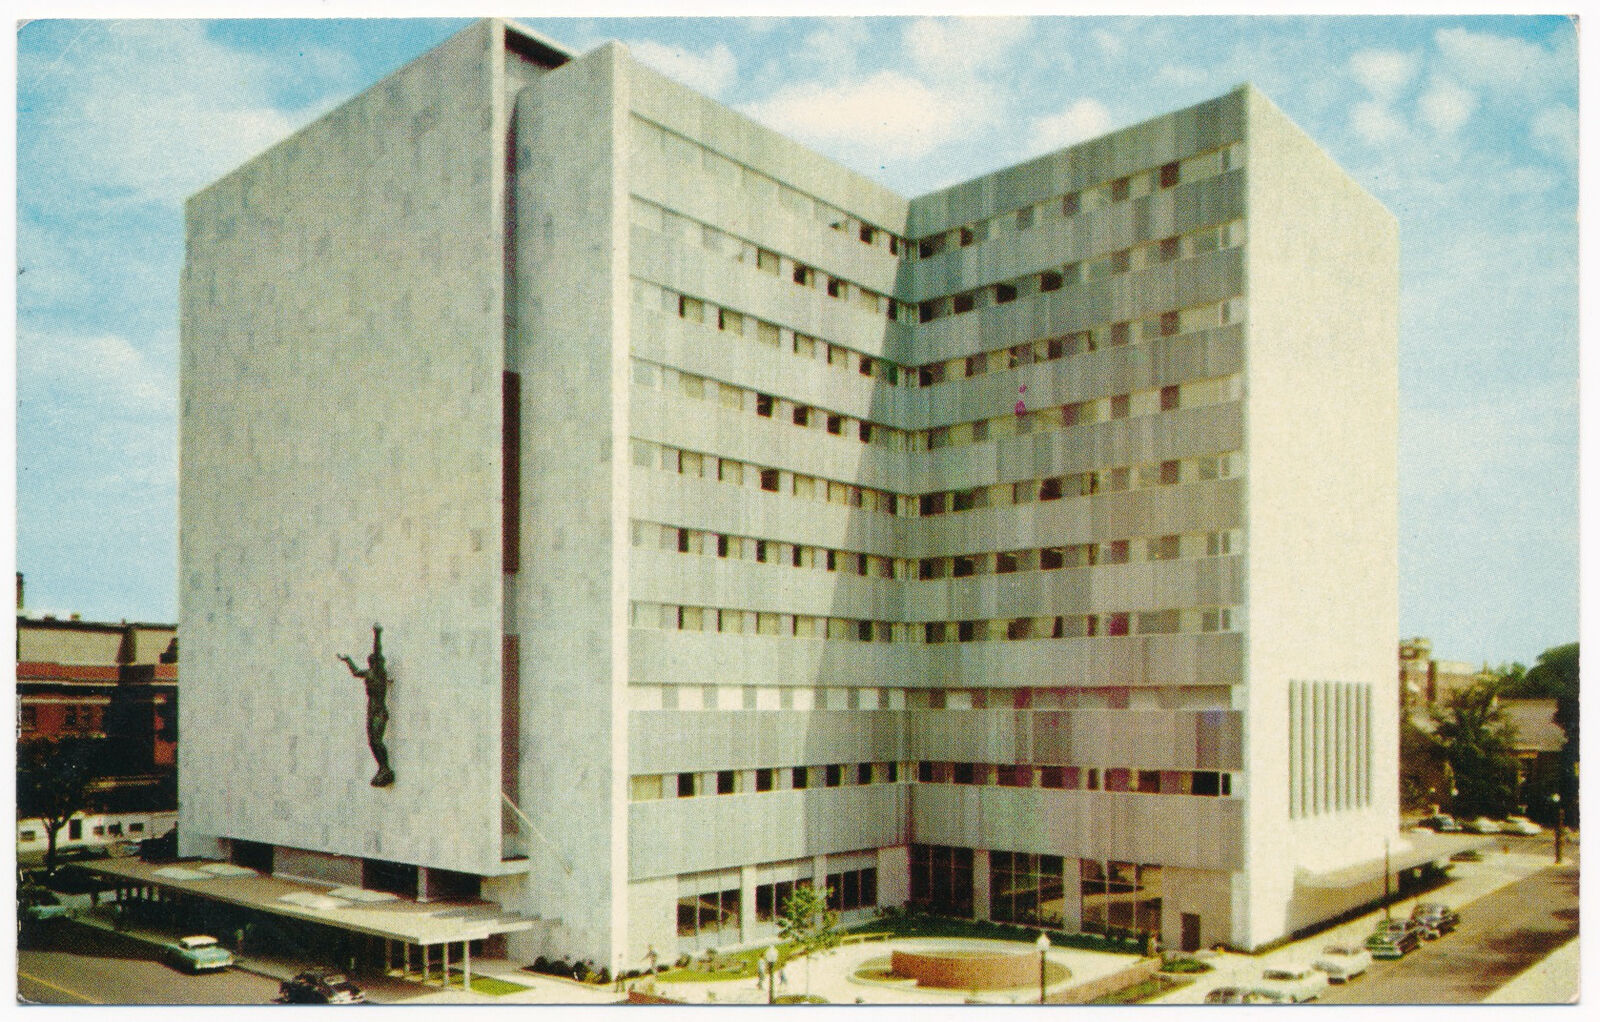 New Mayo Clinic Building, Rochester, Minnesota 1950s